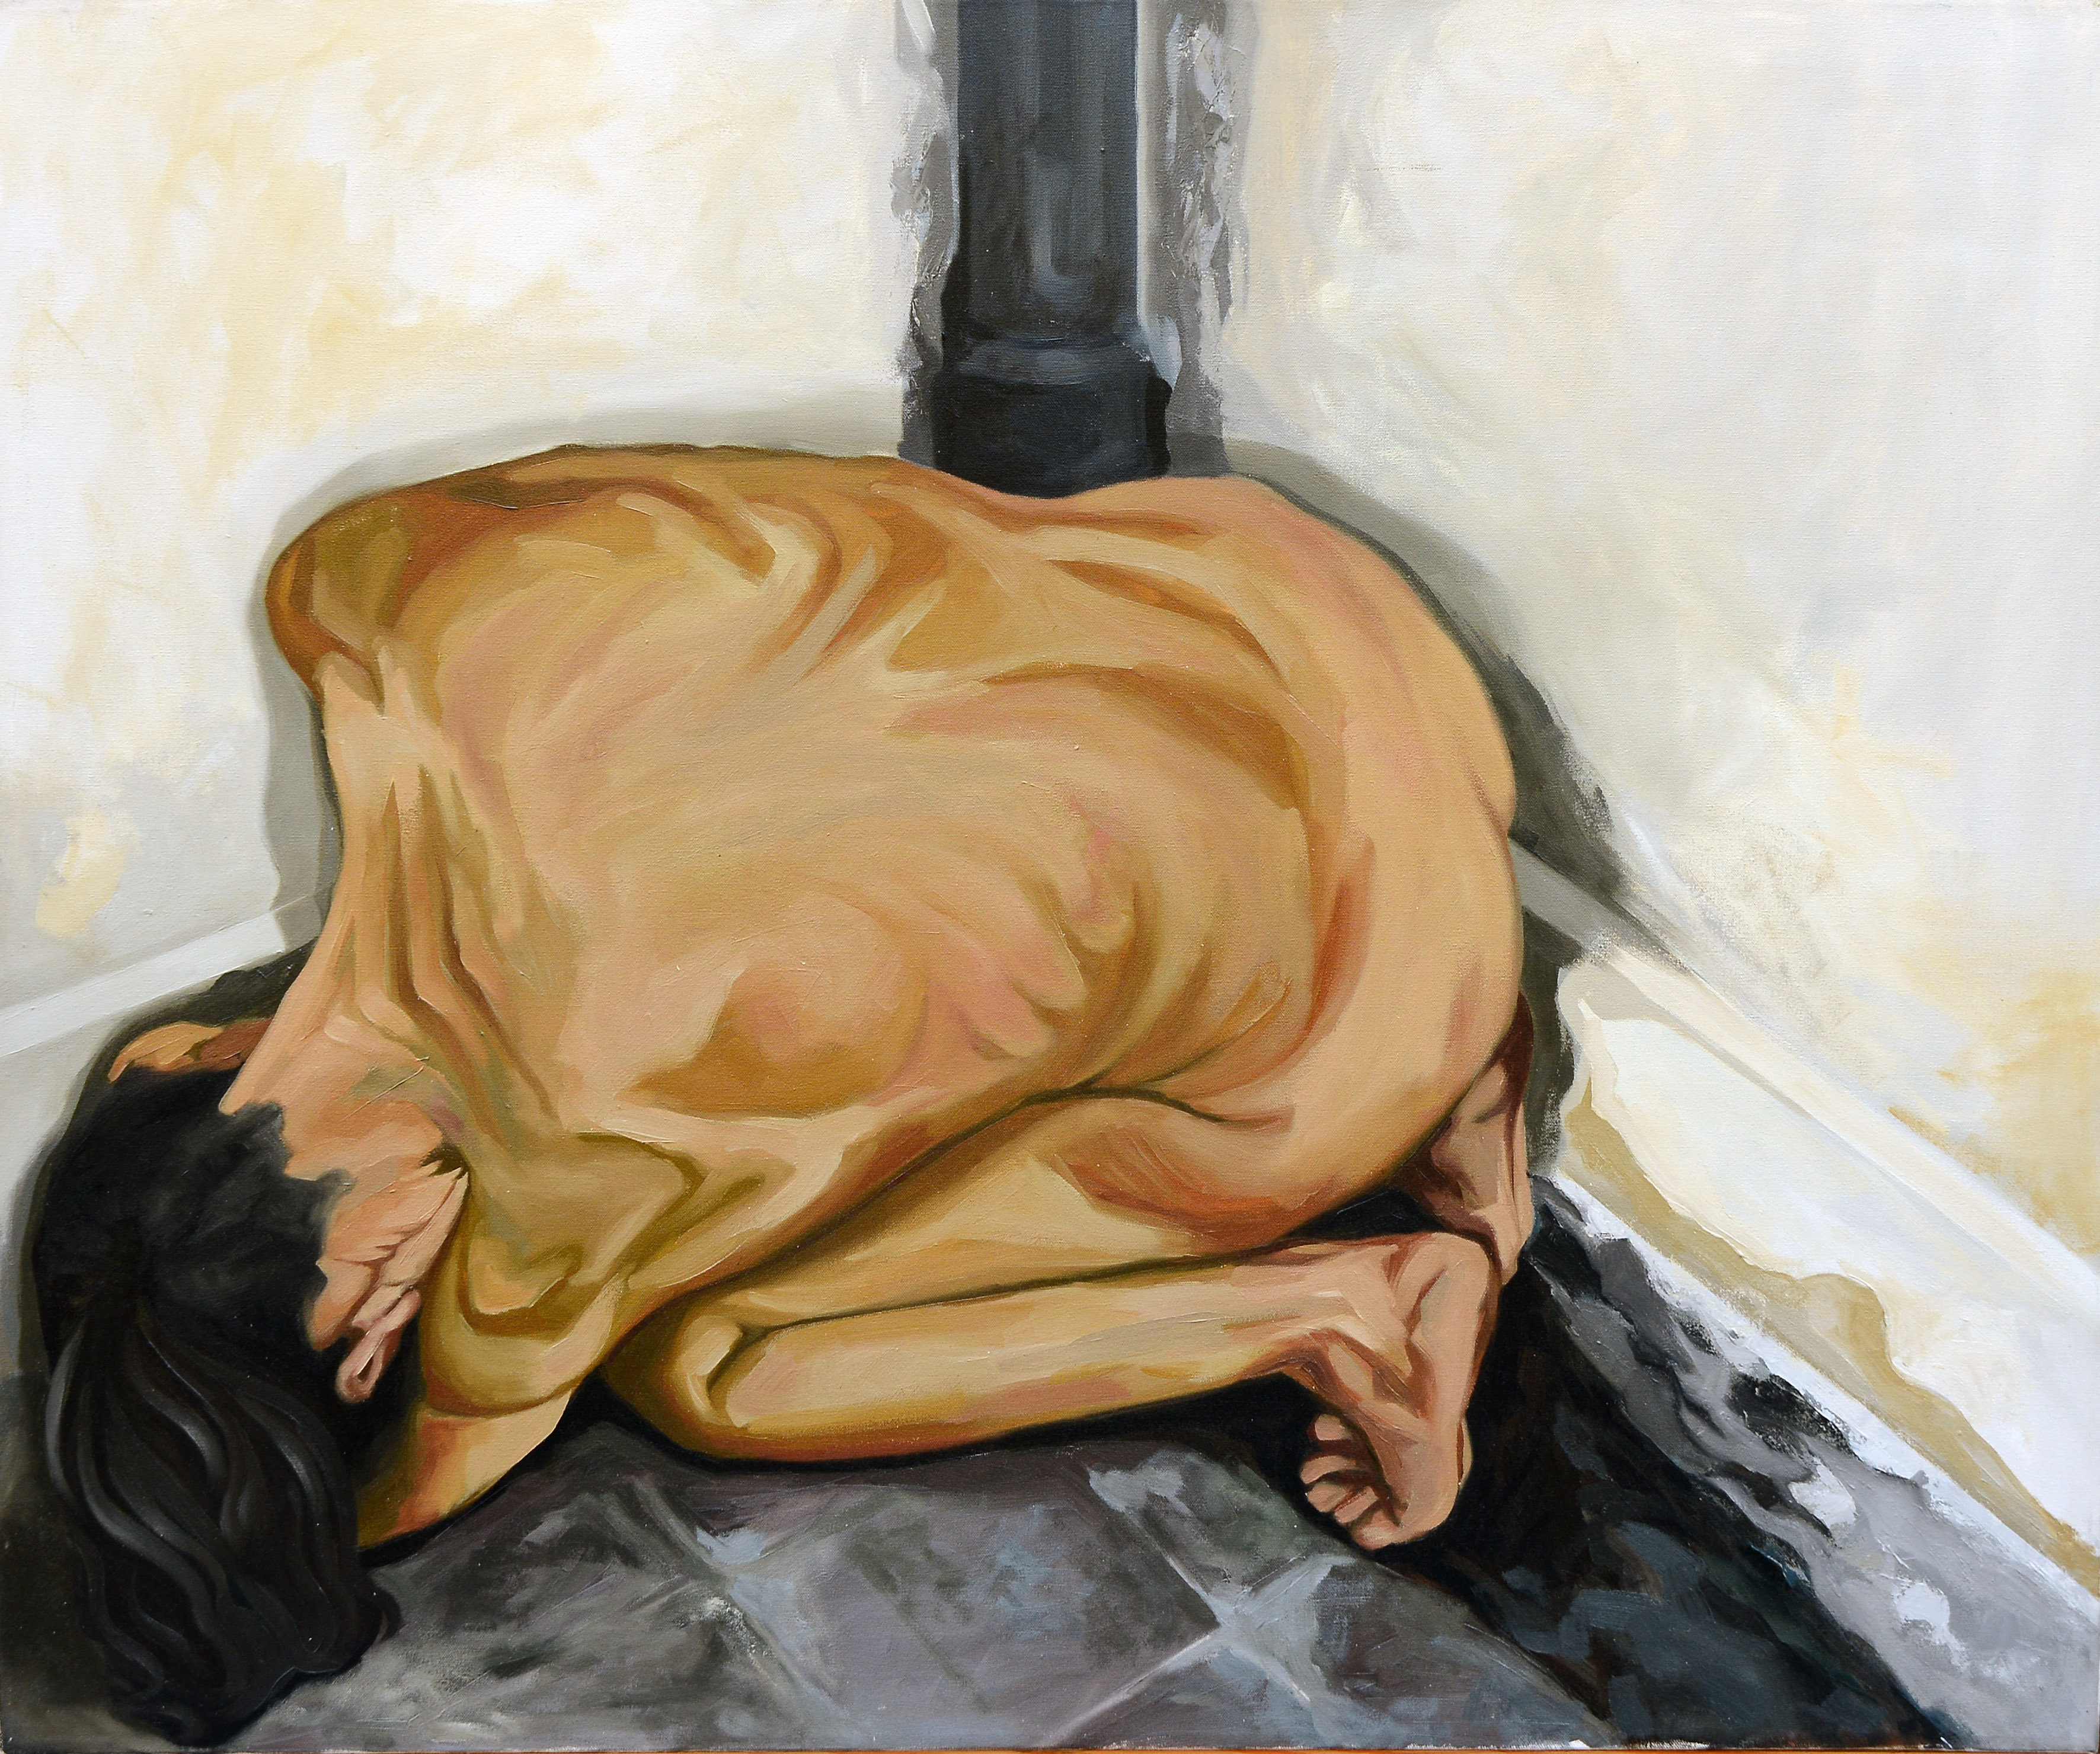 İsimsiz- Untitled, 2009, Tuval üzerine yağlıboya- Oil on canvas, 100x120 cm